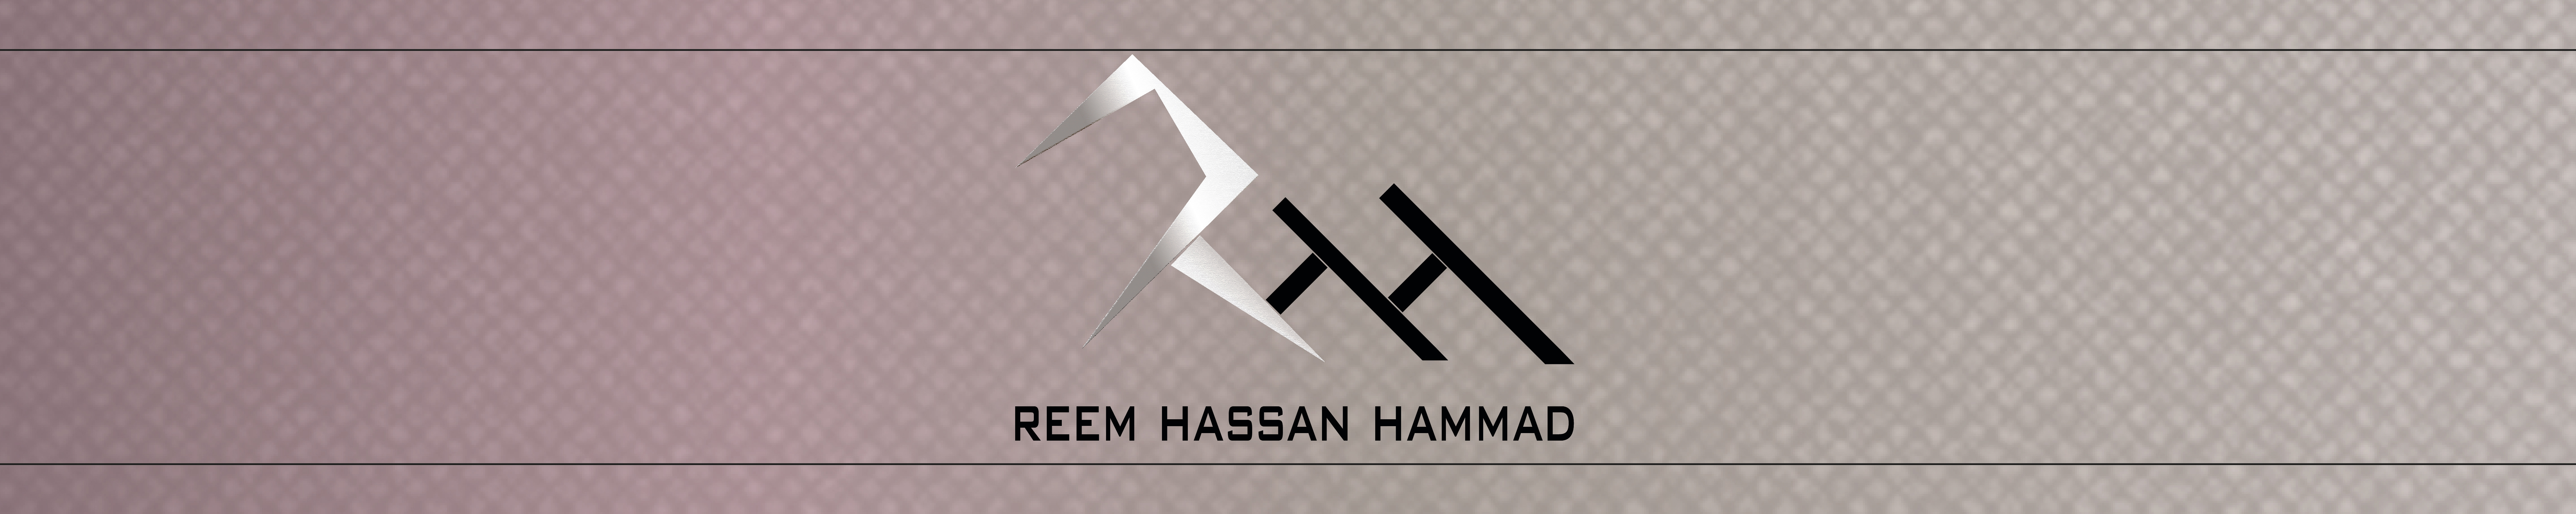 Reem Hammad's profile banner